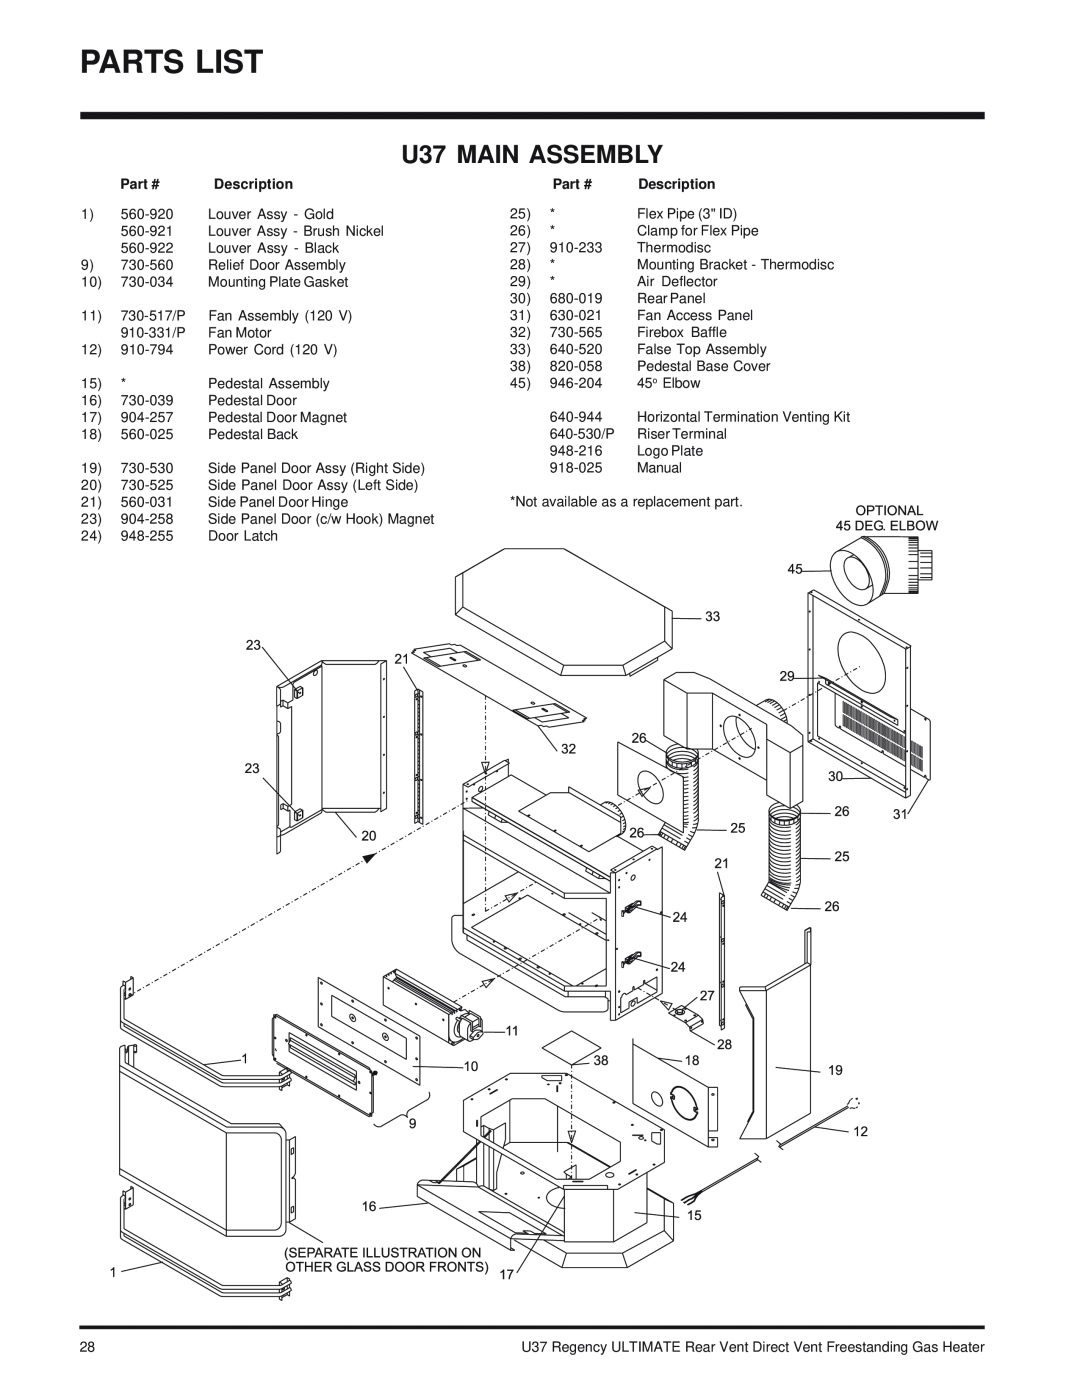 Regency U37-LP PROPANE, U37-NG NATURAL GAS installation manual Parts List, U37 MAIN ASSEMBLY 